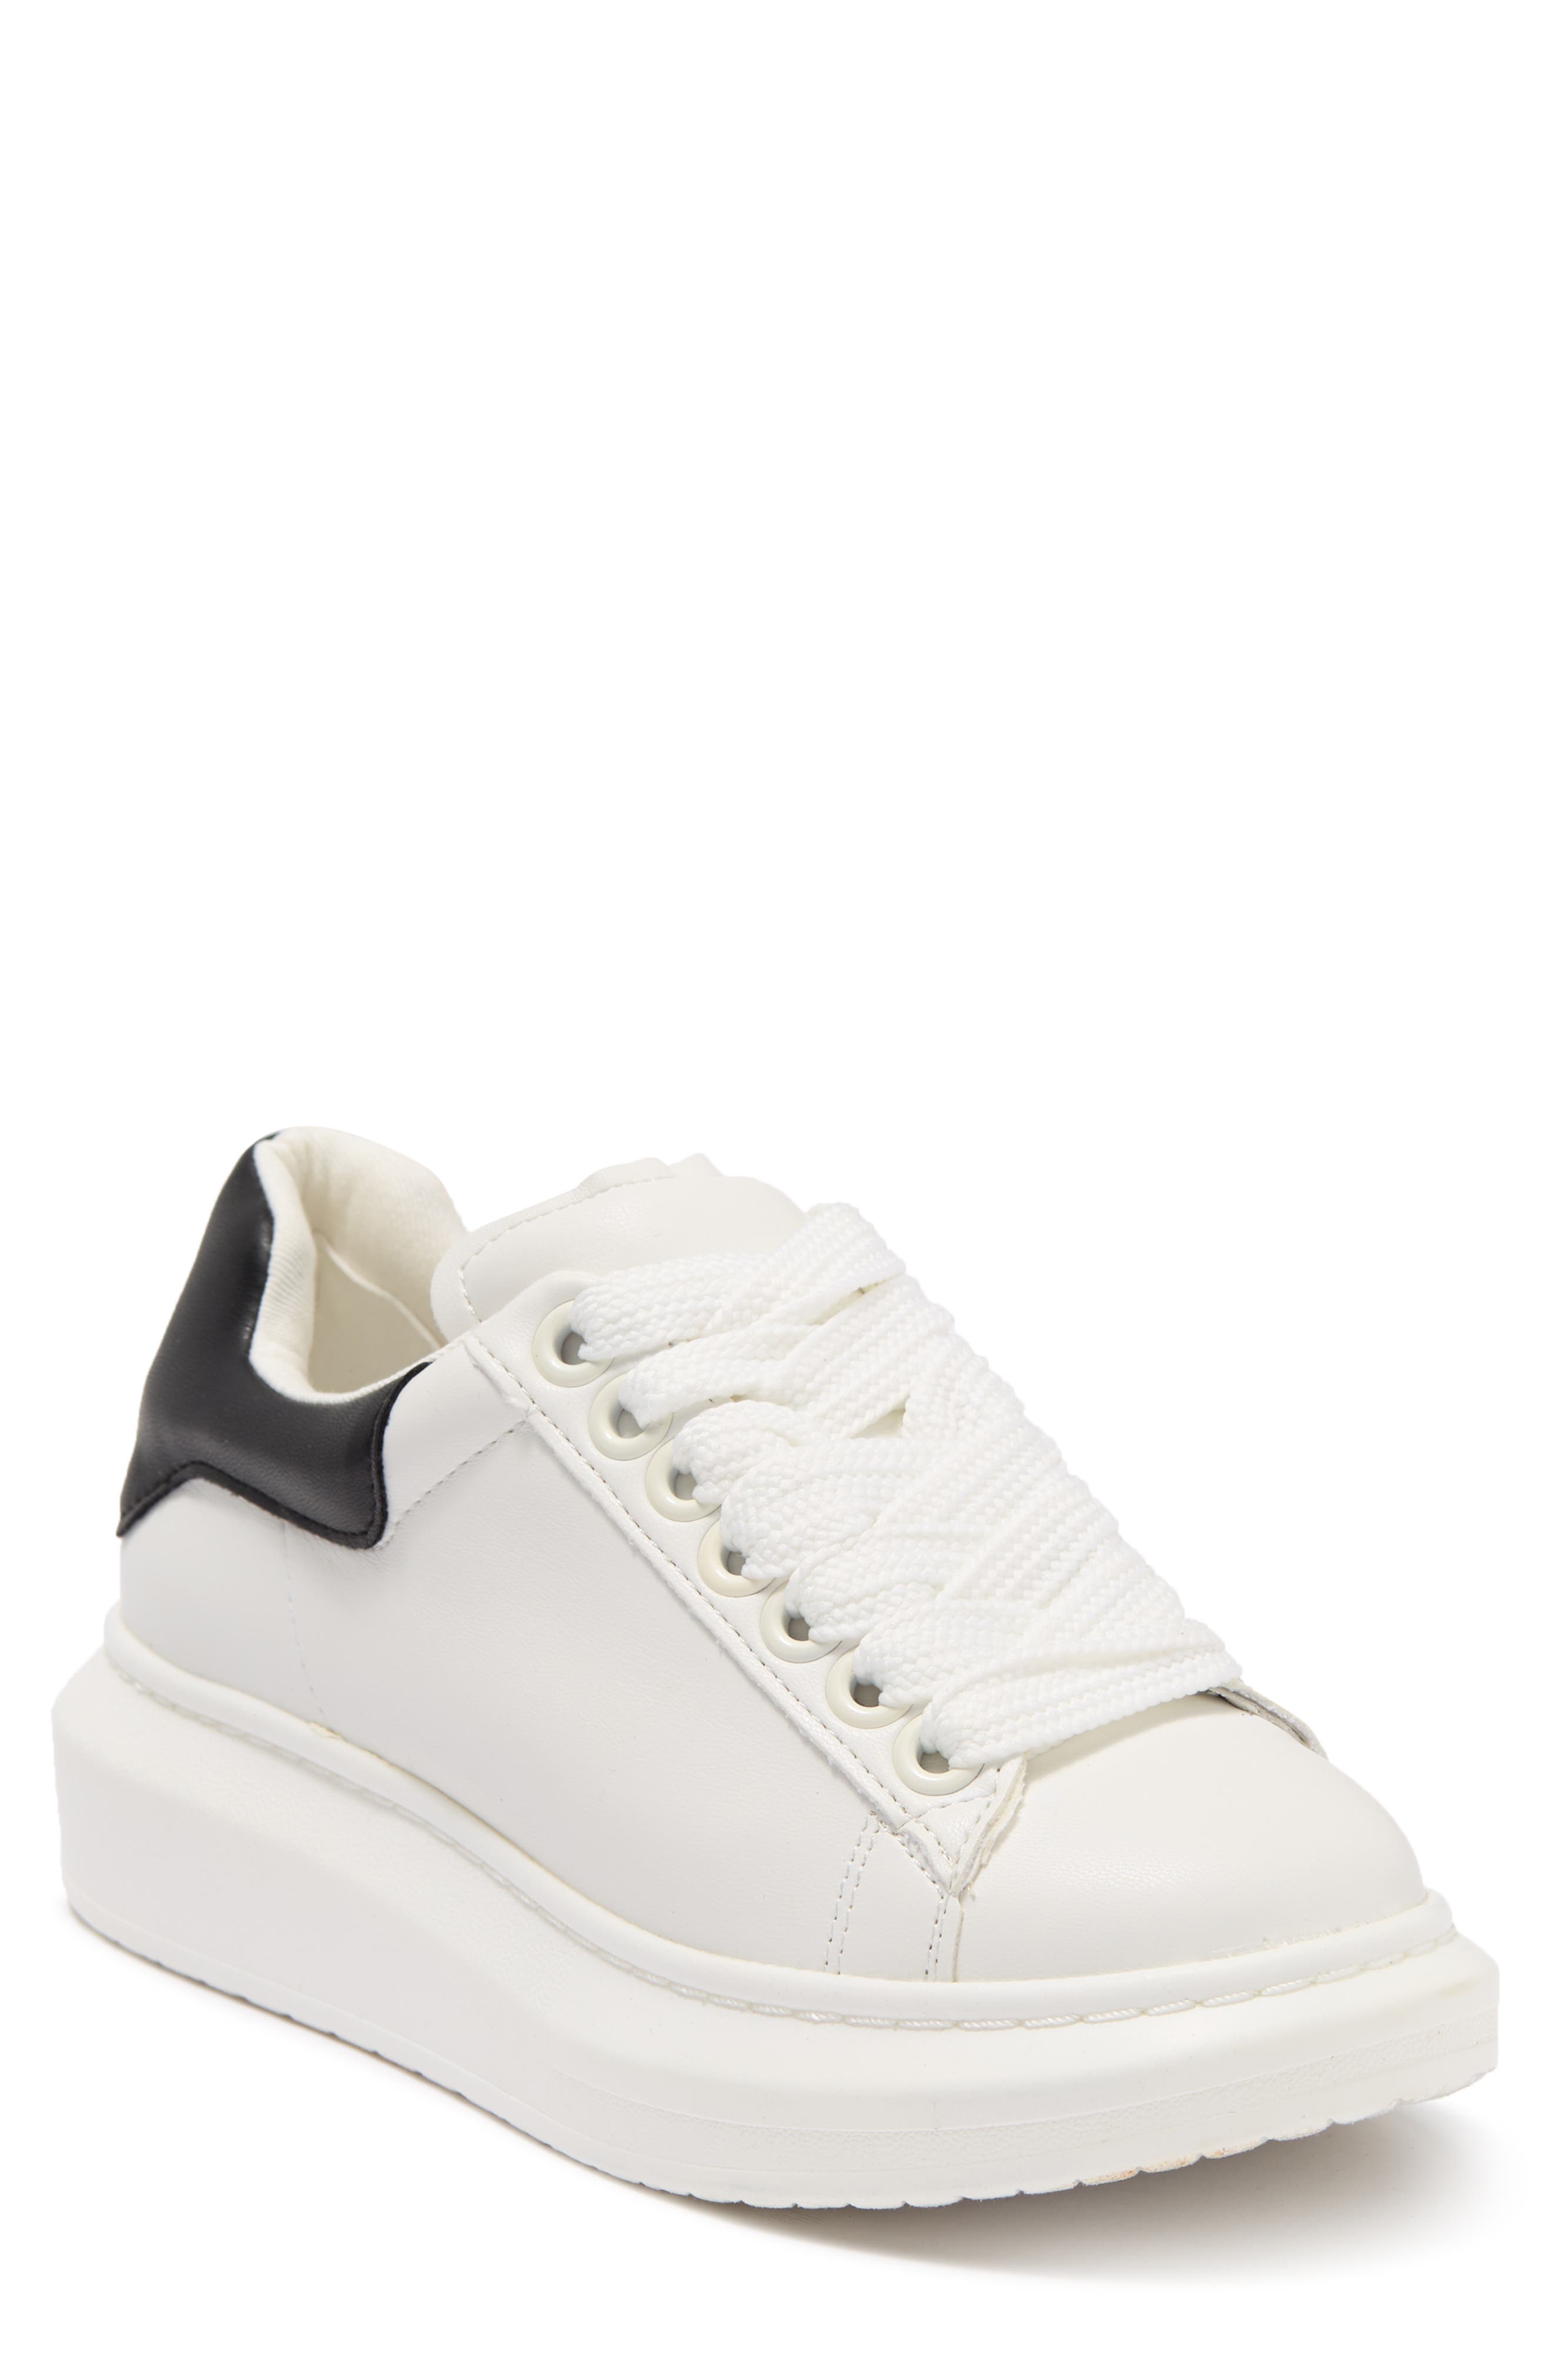 white slip on platform shoes